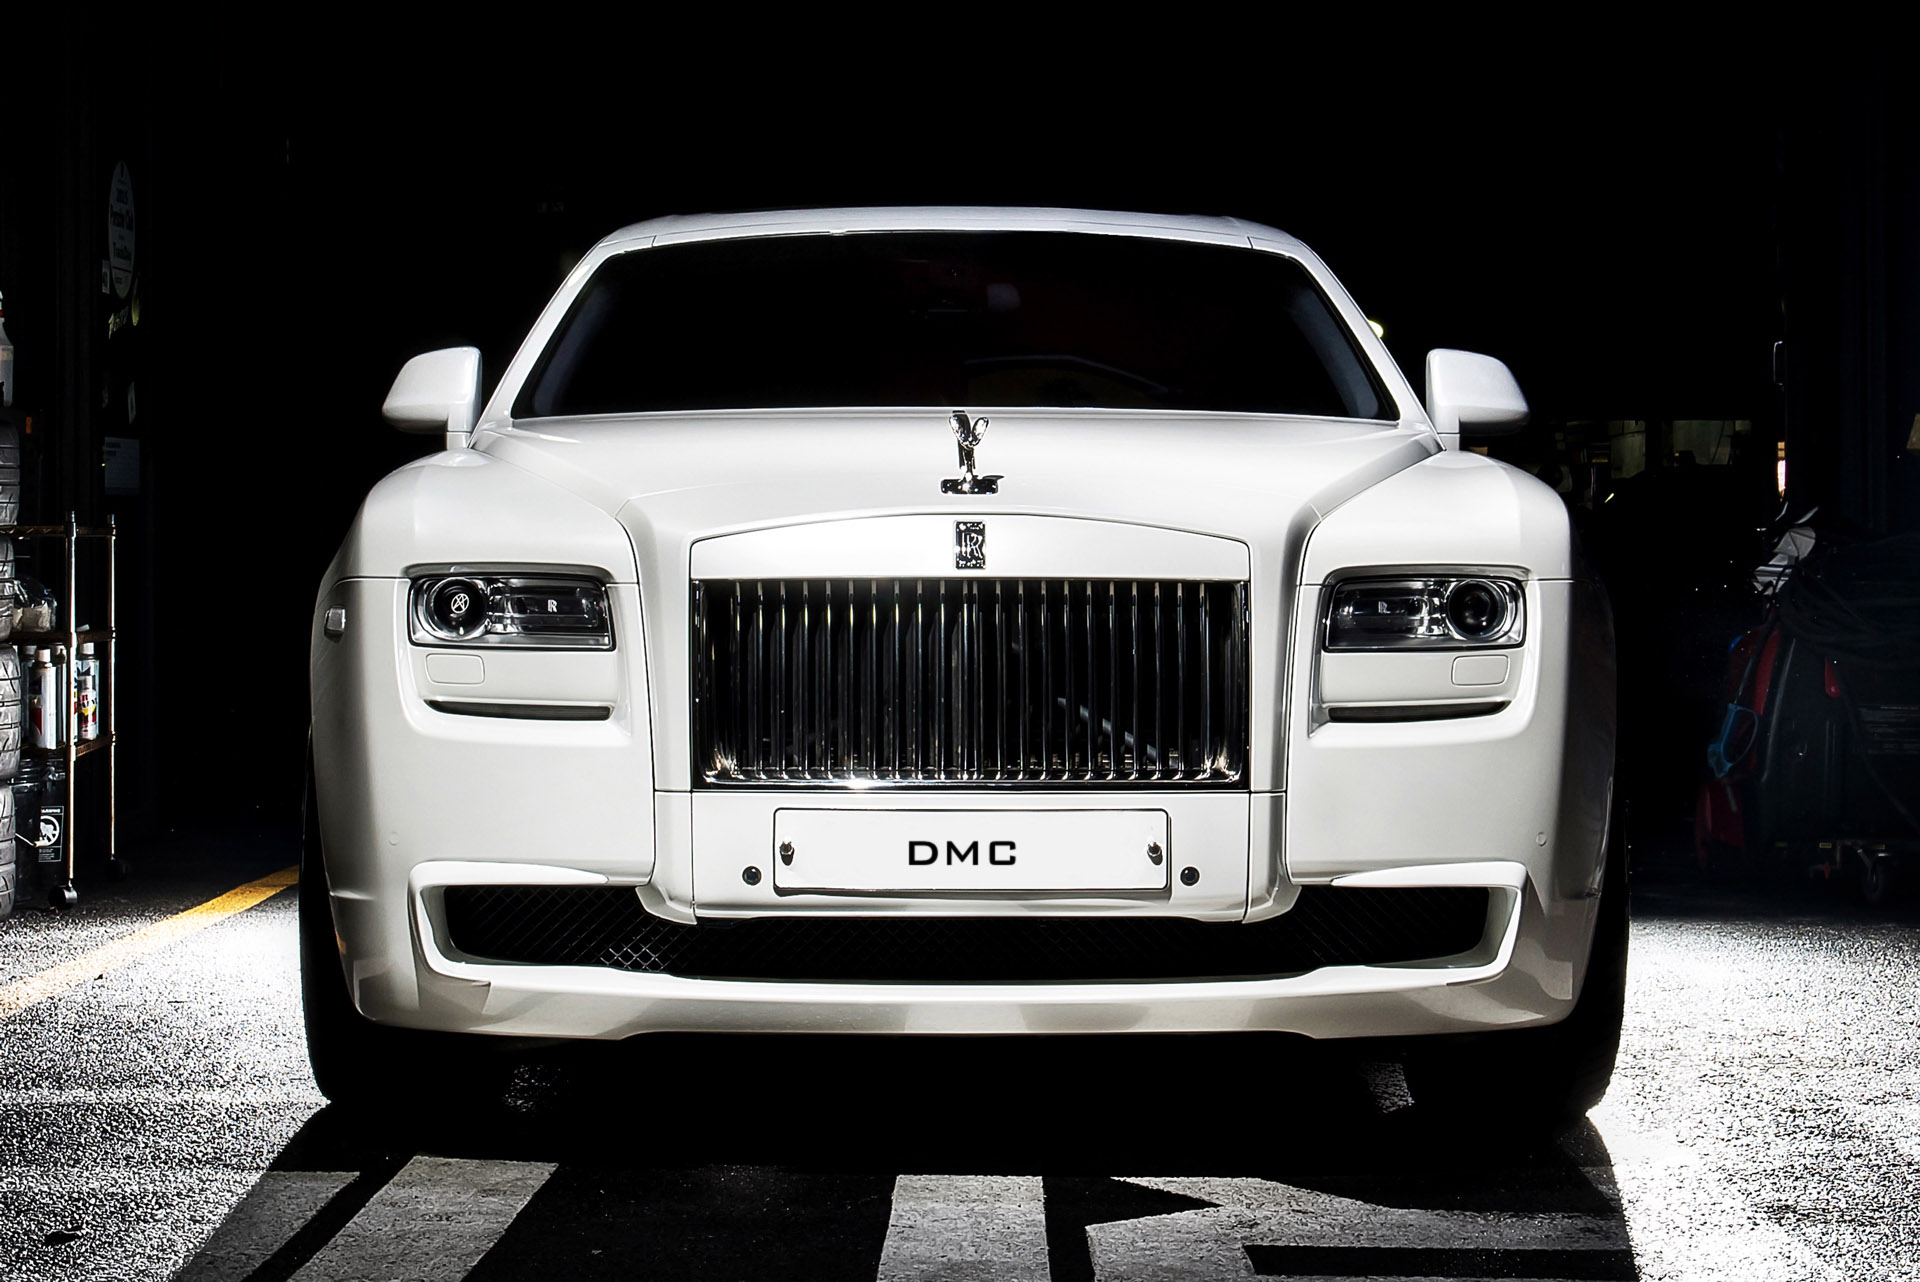 DMC Rolls Royce Ghost SaRangHae